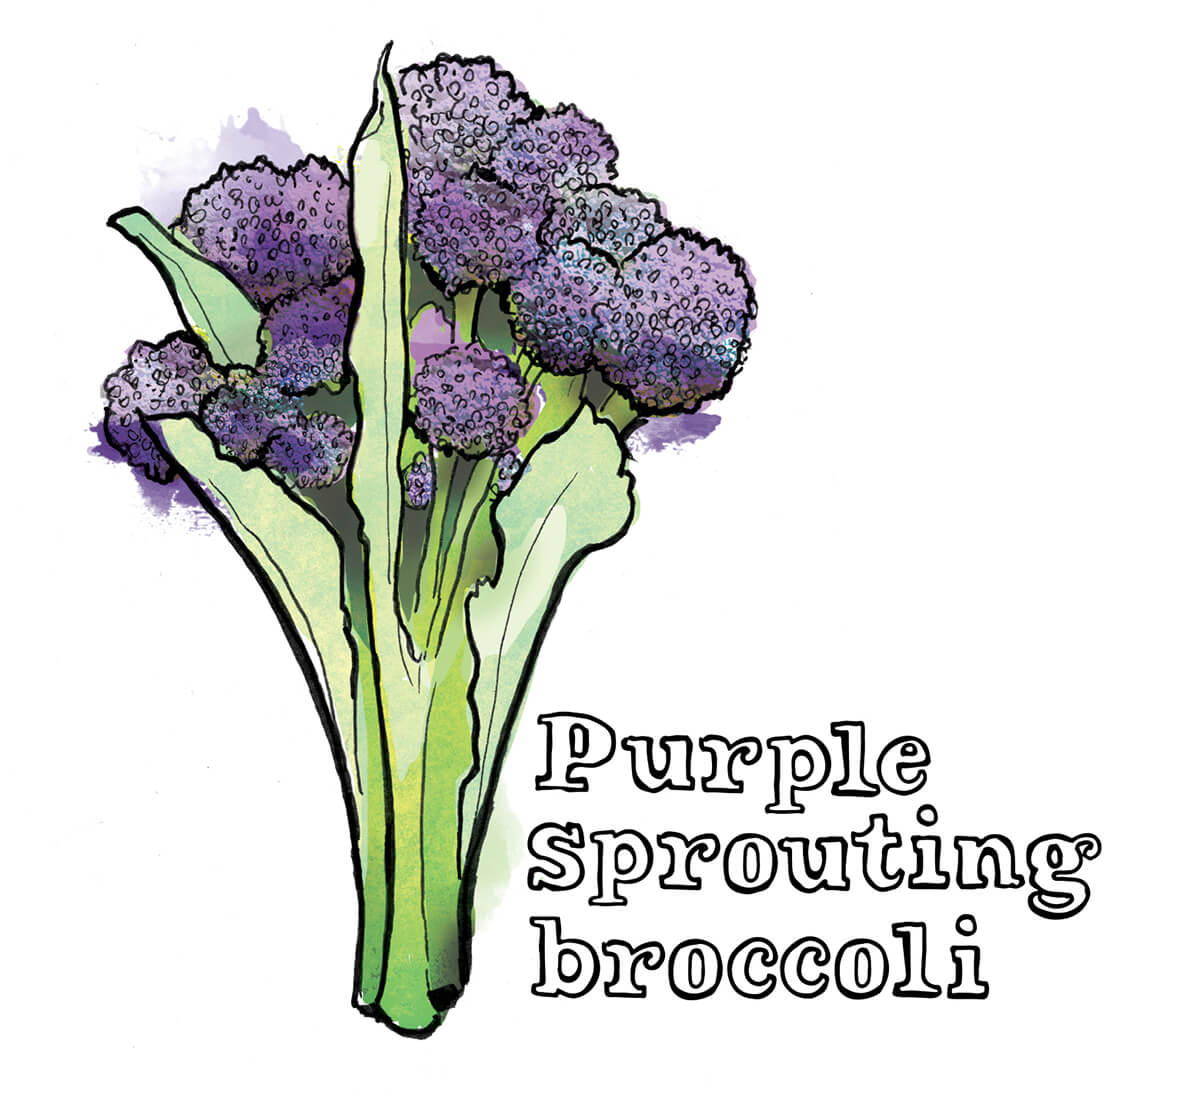 broccoli illustration